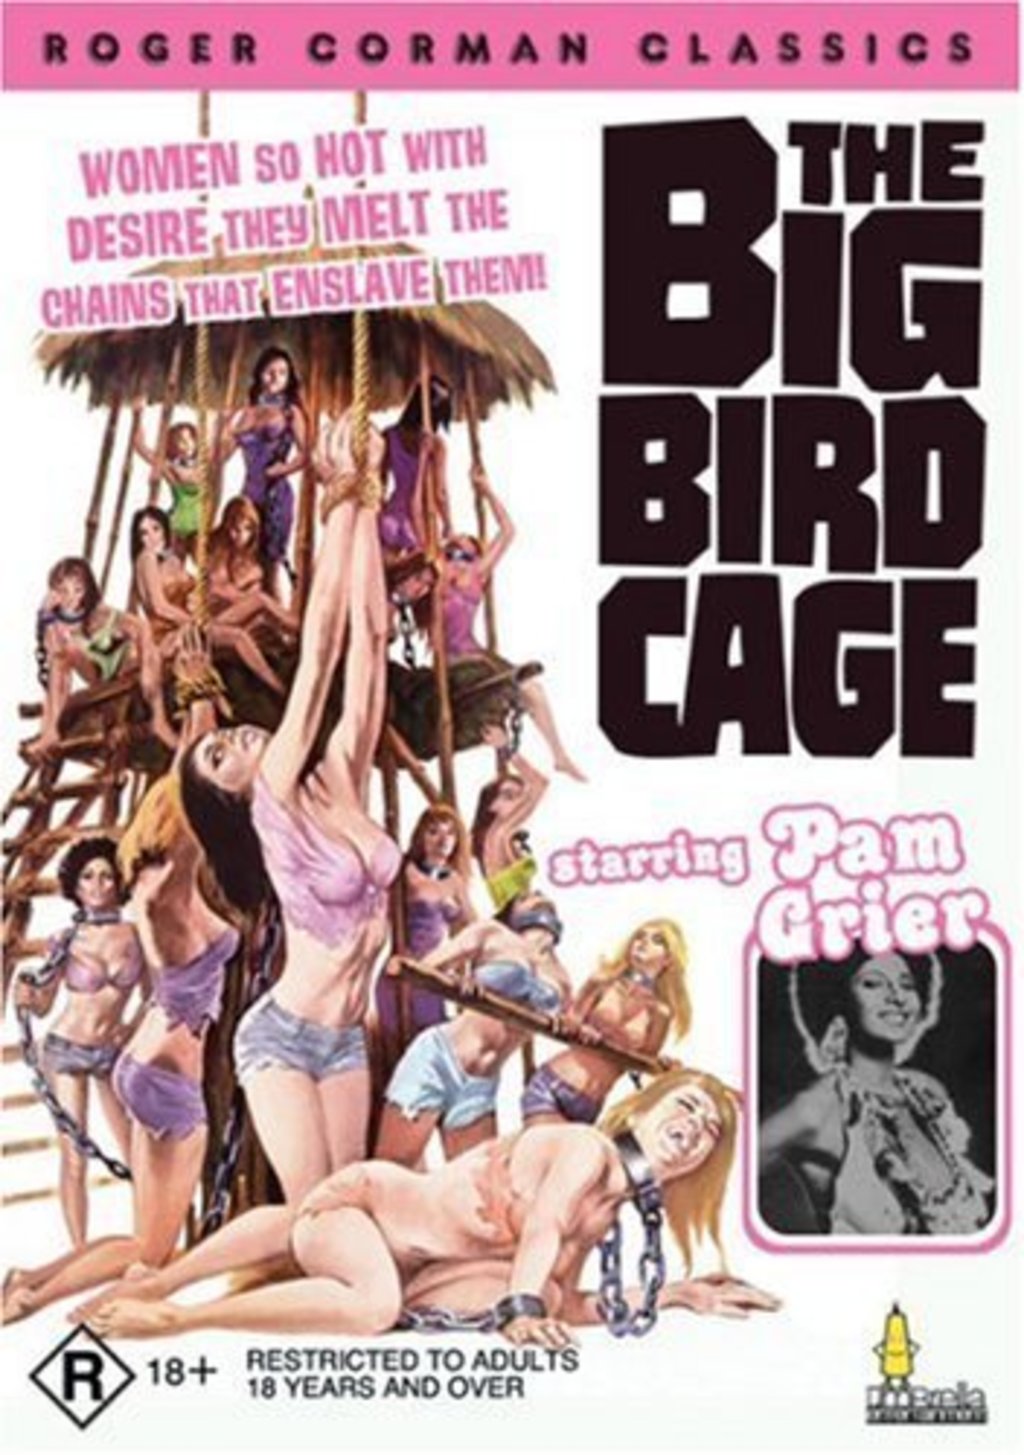 The big bird cage cast